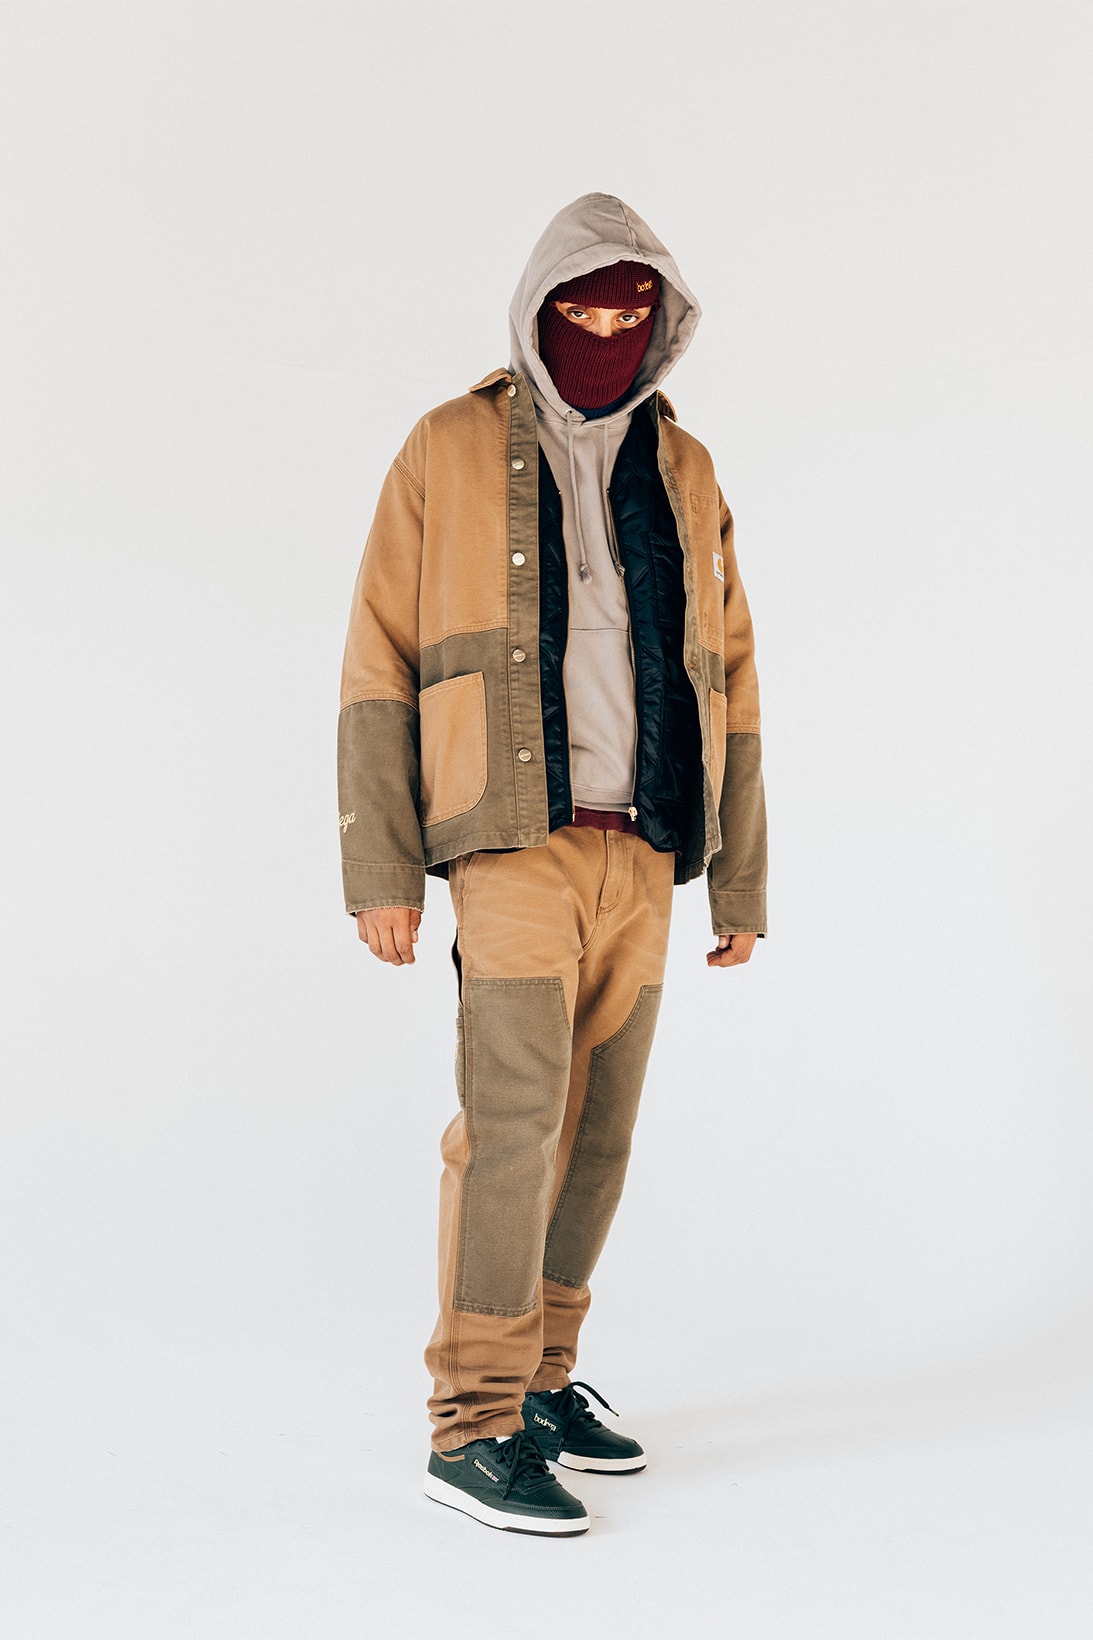 WDYWT] This carhartt jacket is soo cool ( the pants are bershka